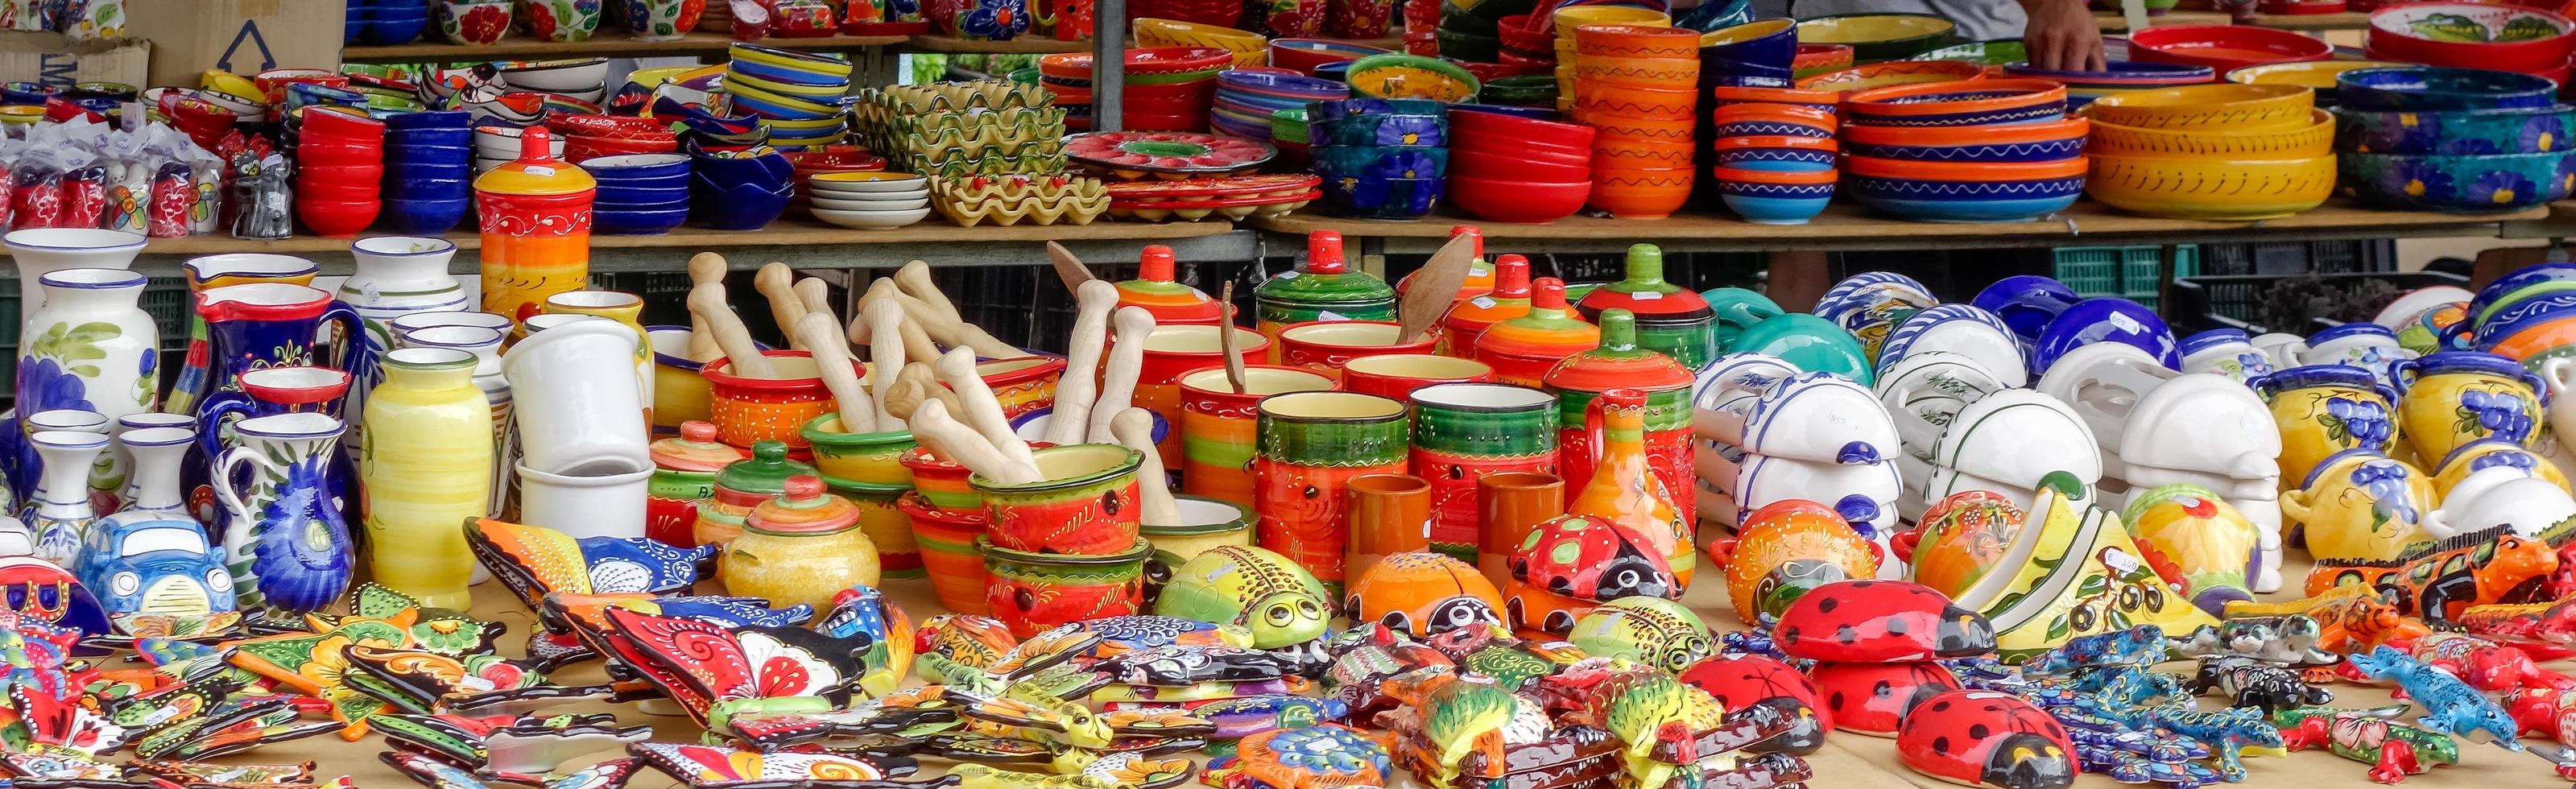 BENALMADENA, ANDALUCIA, SPAIN, 2014. Market stall in Benalmadena photo